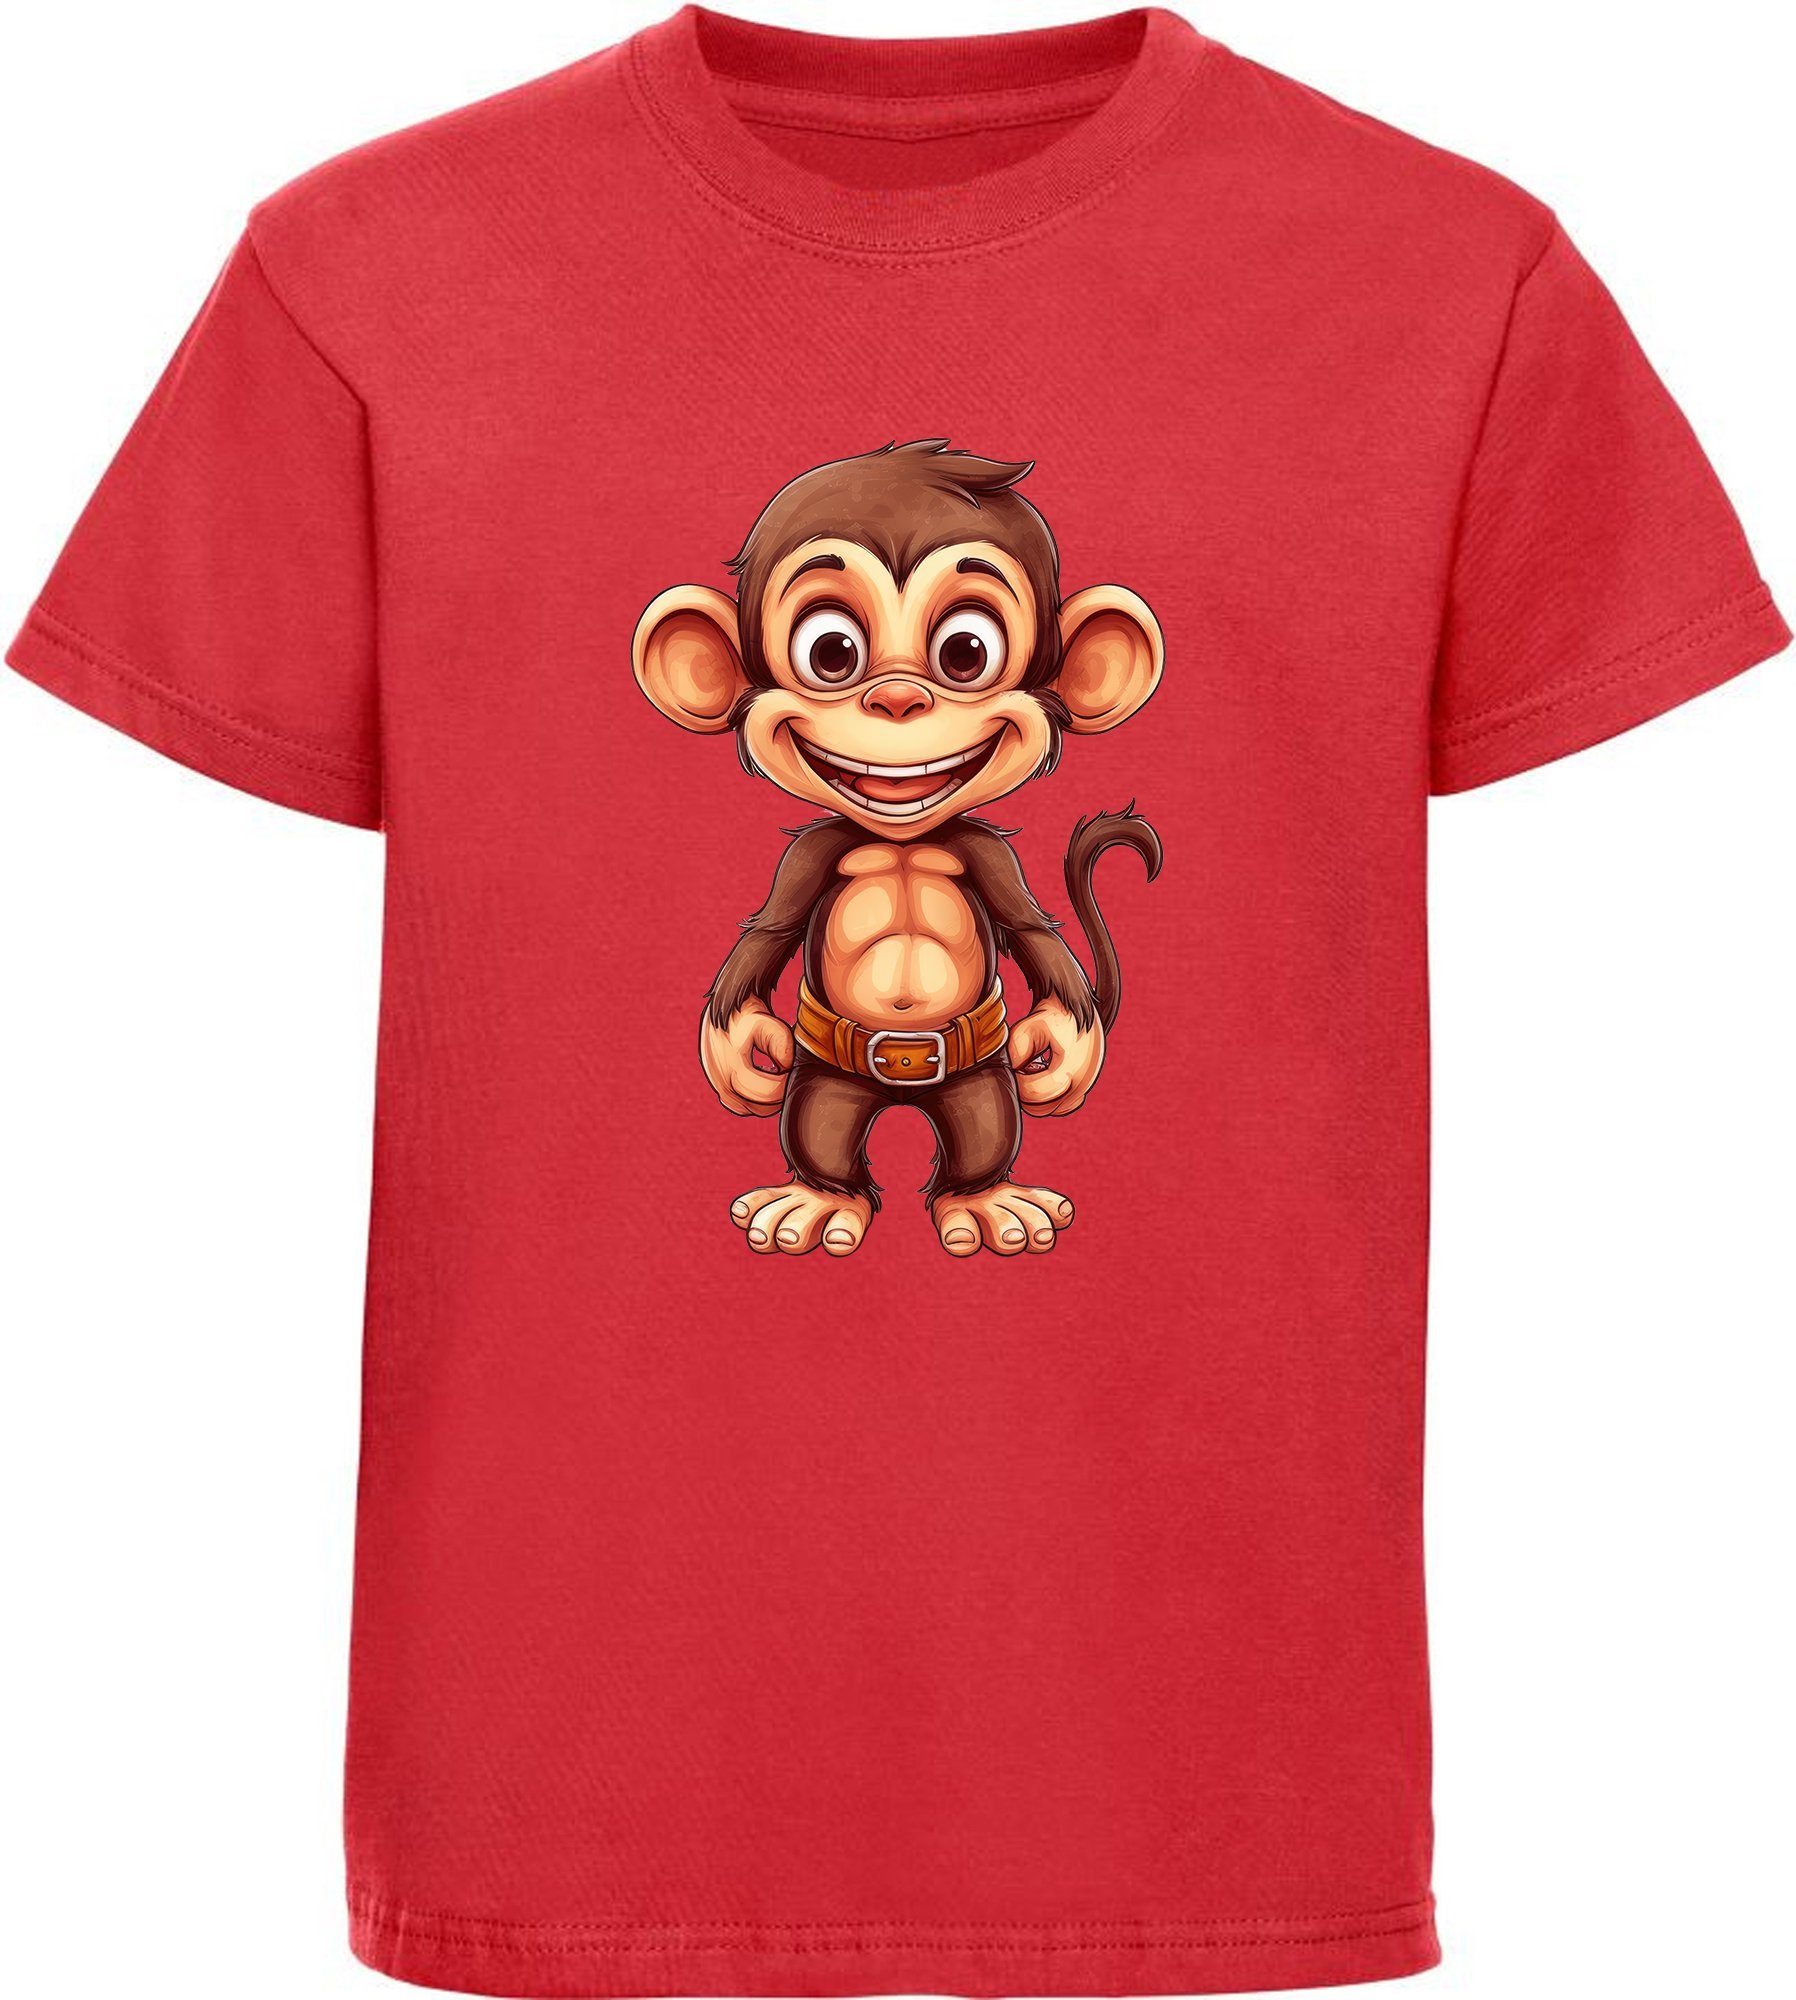 MyDesign24 T-Shirt Kinder Wildtier Print Shirt bedruckt - Baby Affe Schimpanse Baumwollshirt mit Aufdruck, i276 rot